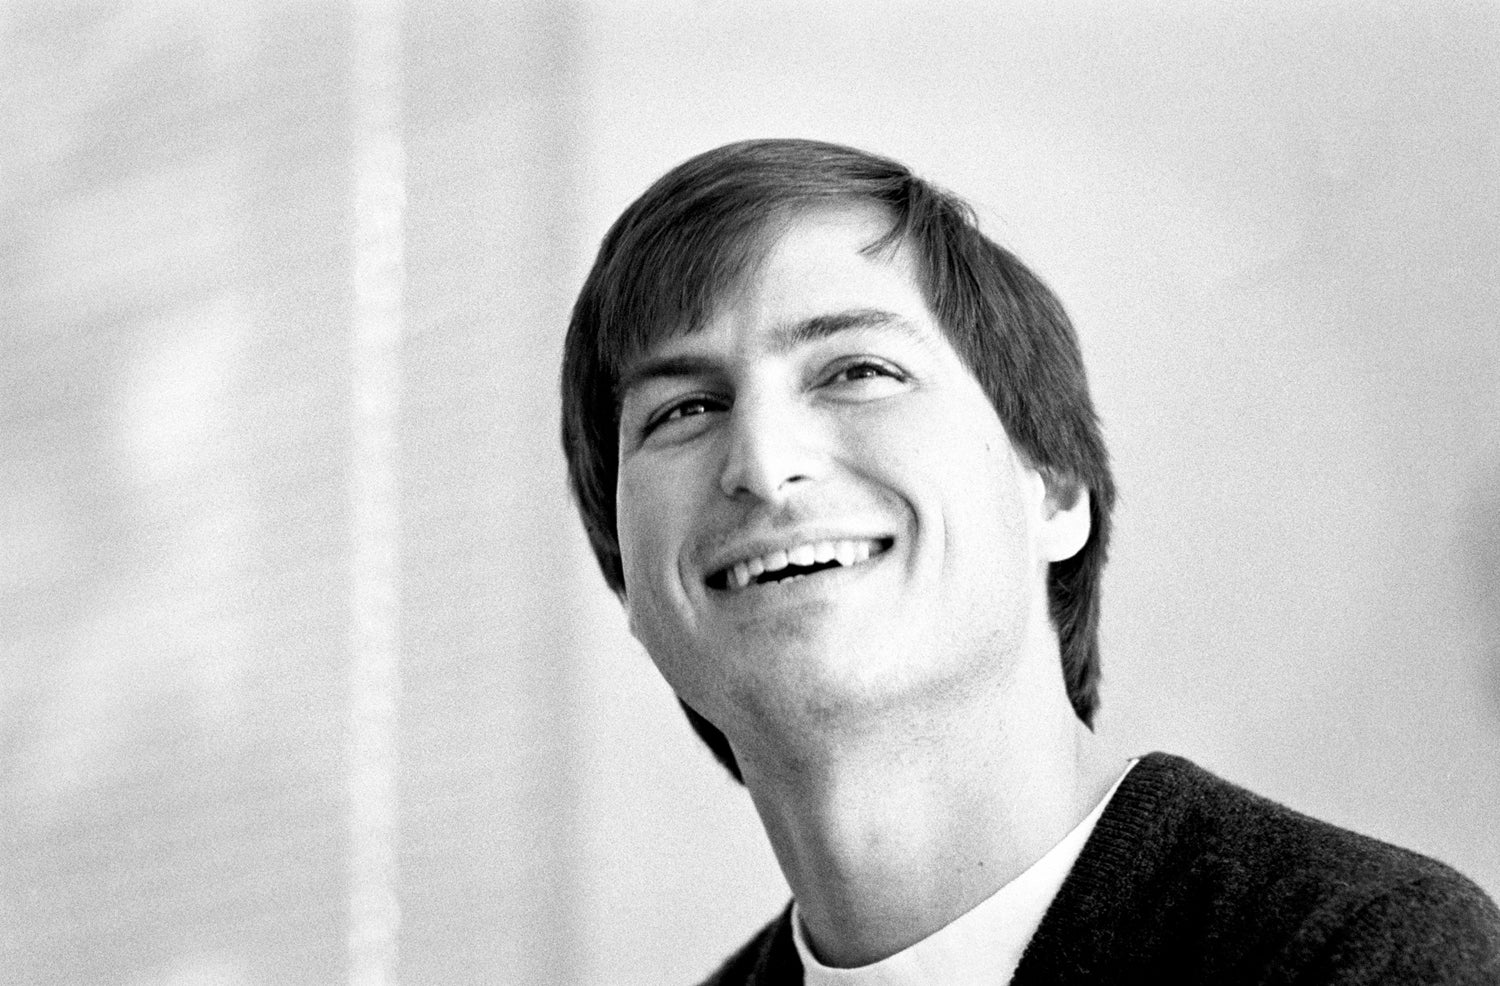 Steve Jobs in a Moment of Joy